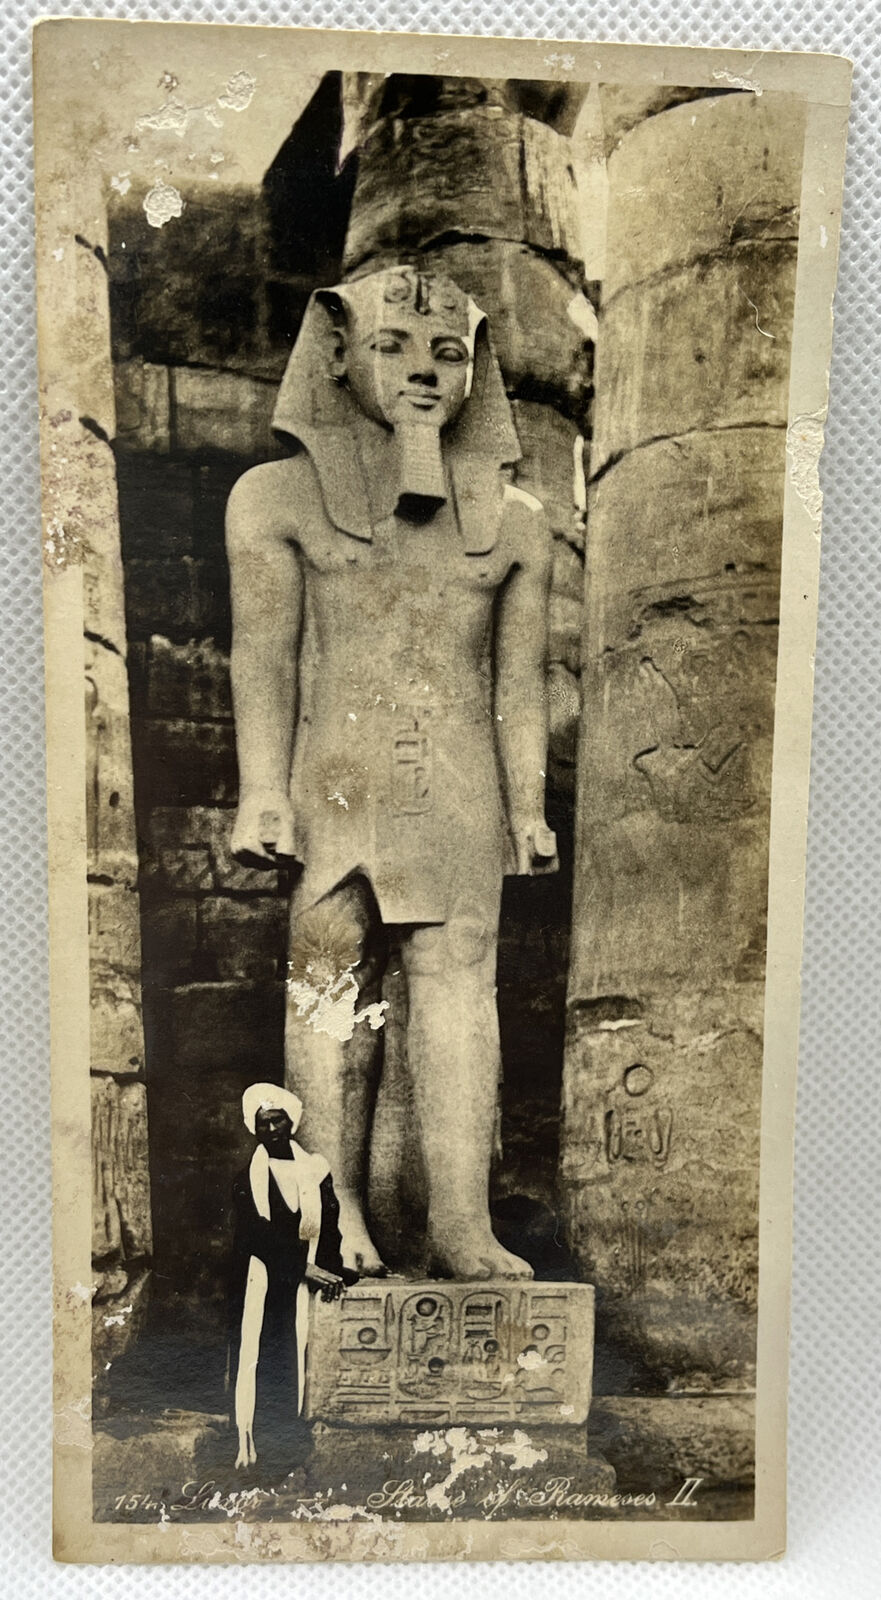 CPA Lehnert & Landrock 154 Luxor Temple - Statue of Ramses II EEGYPT Egypt